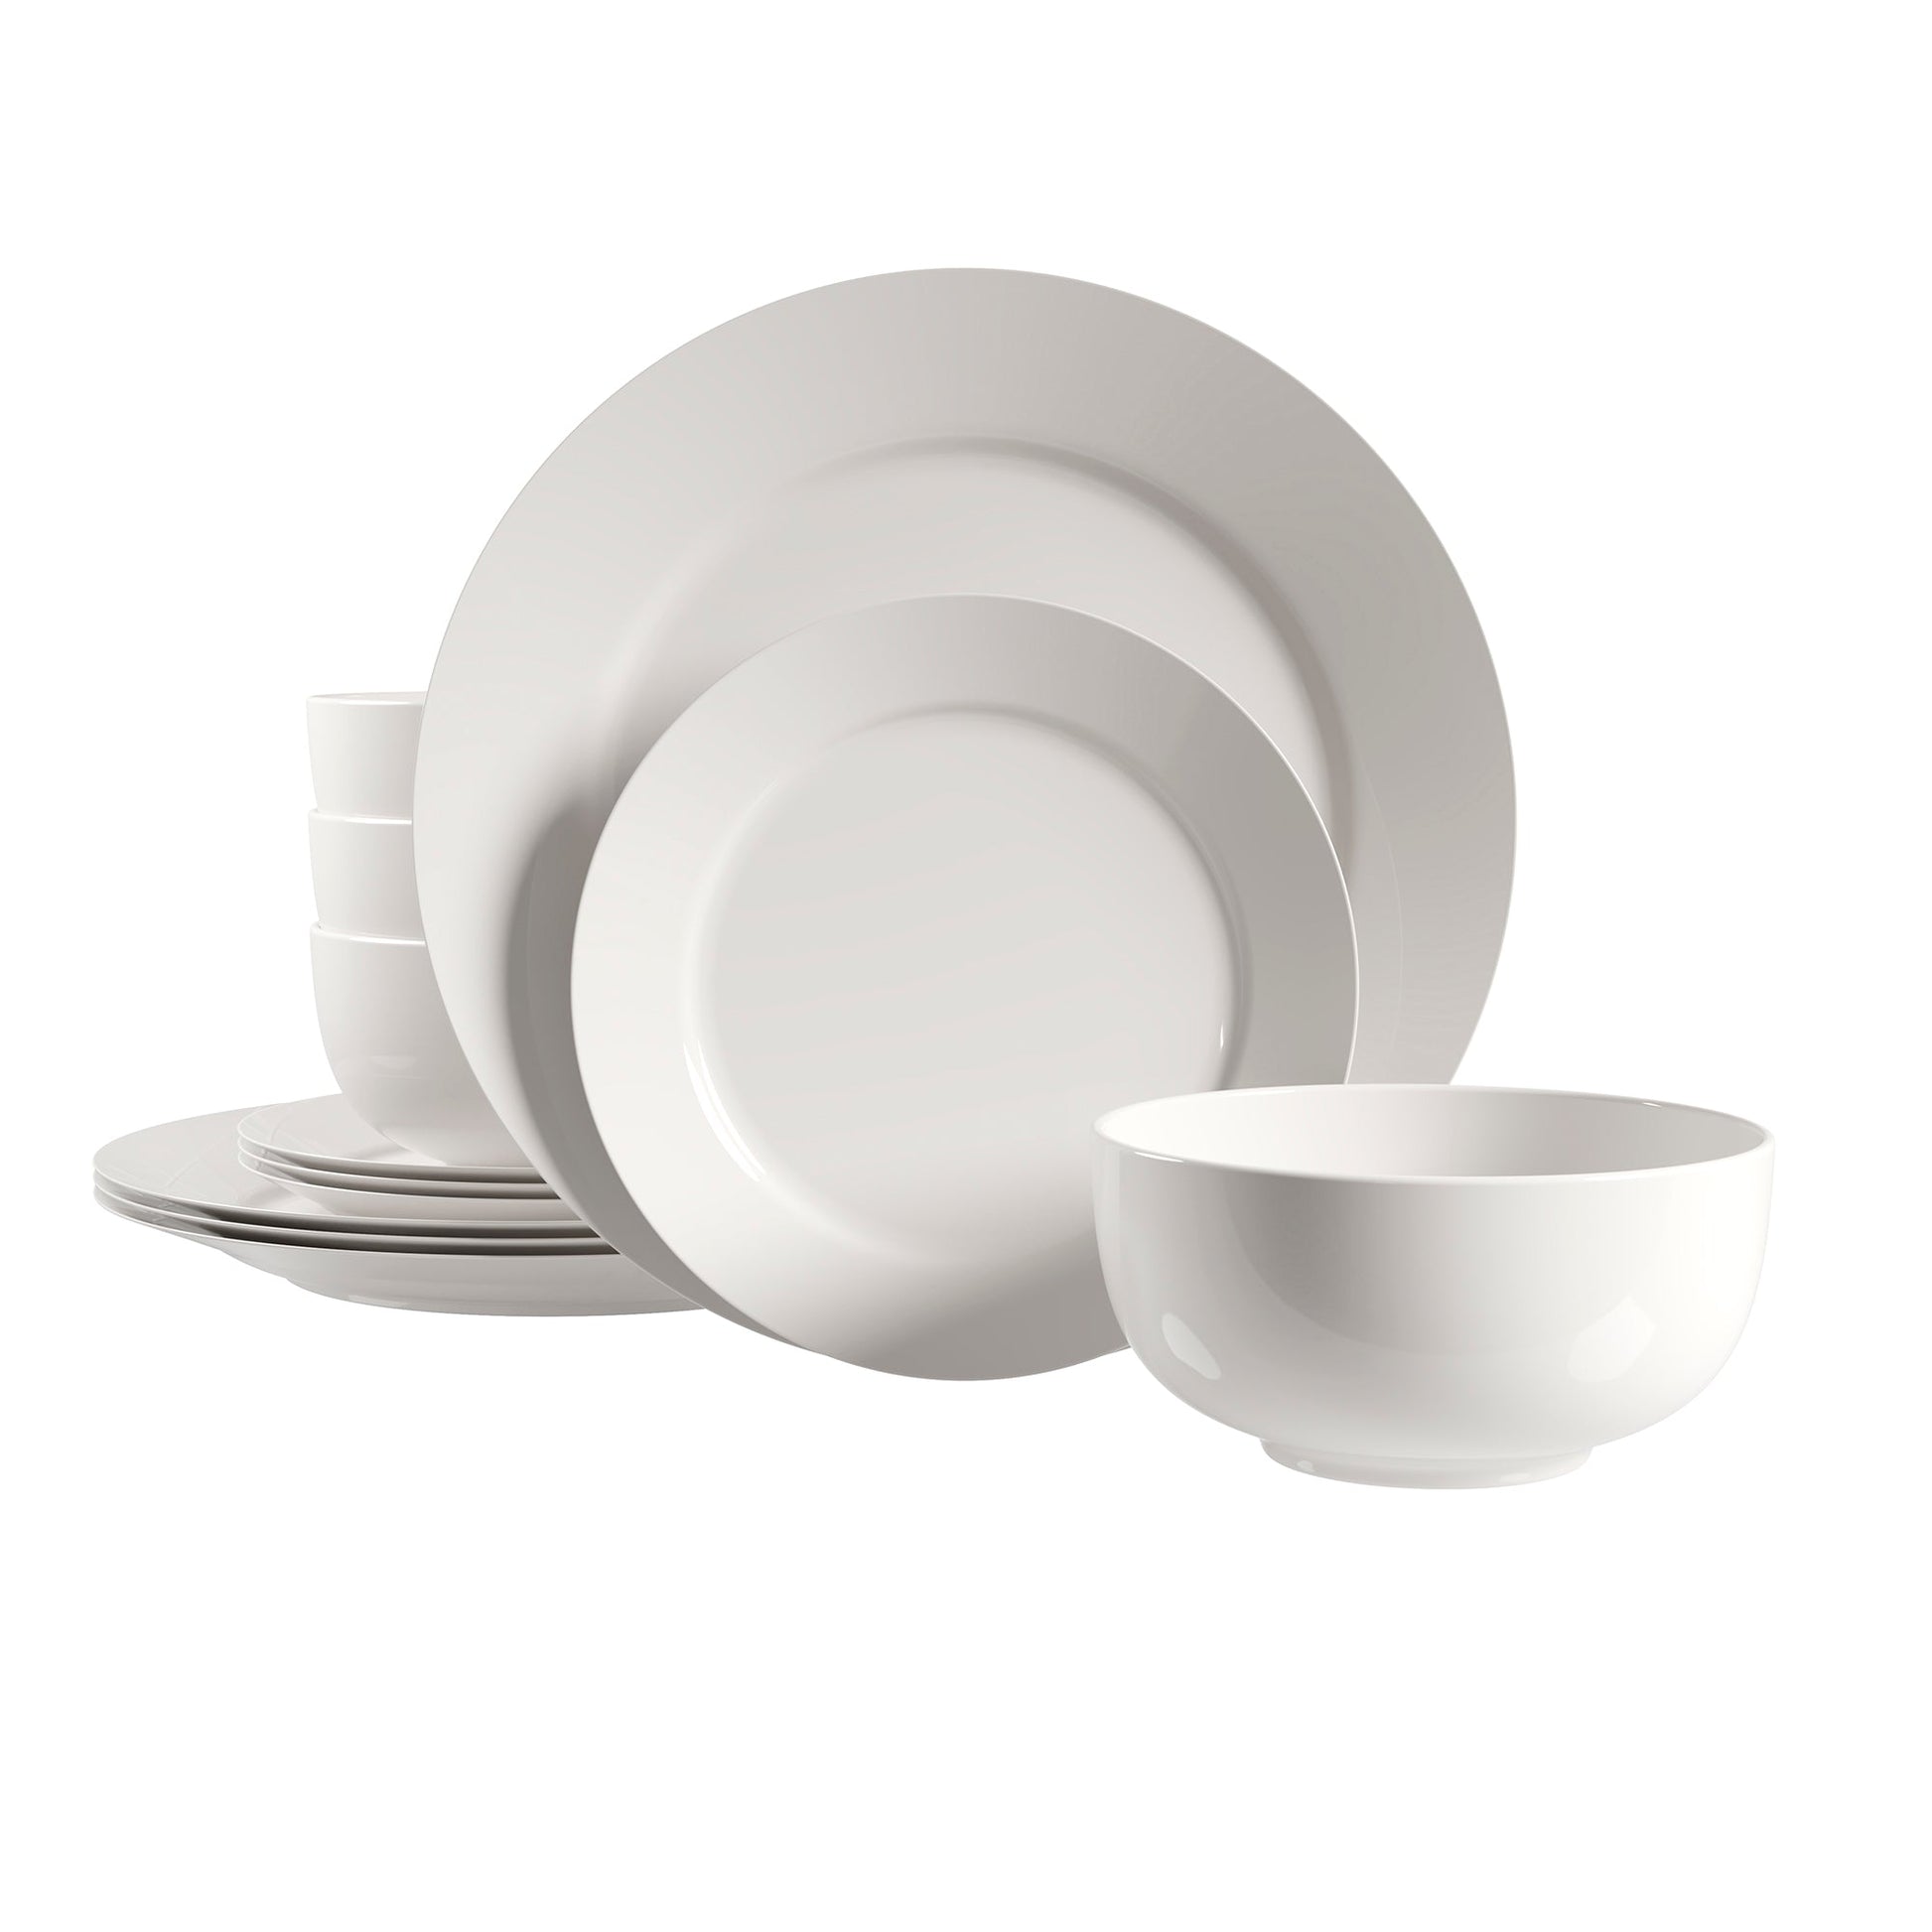 Dinnerware Set 12 Piece Plain White Round Rim, Service for 4 - DecoElegance - Dinnerware Set